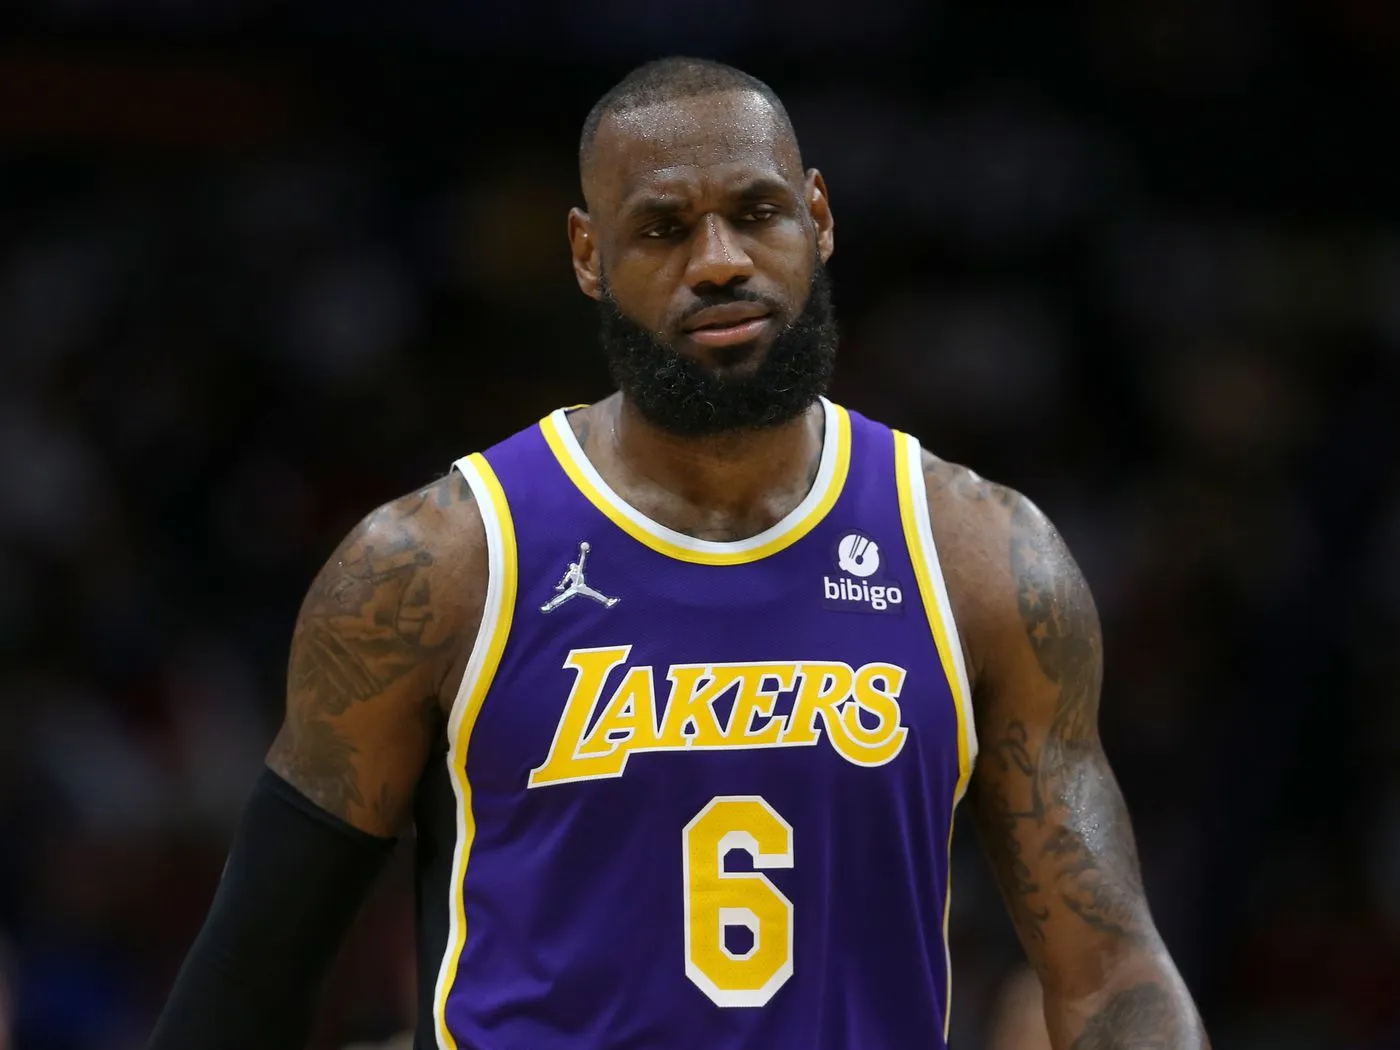 Lakers LeBron James praise Mavs’ Luka Doncic amid Kidd's speaking of his dominant spirit